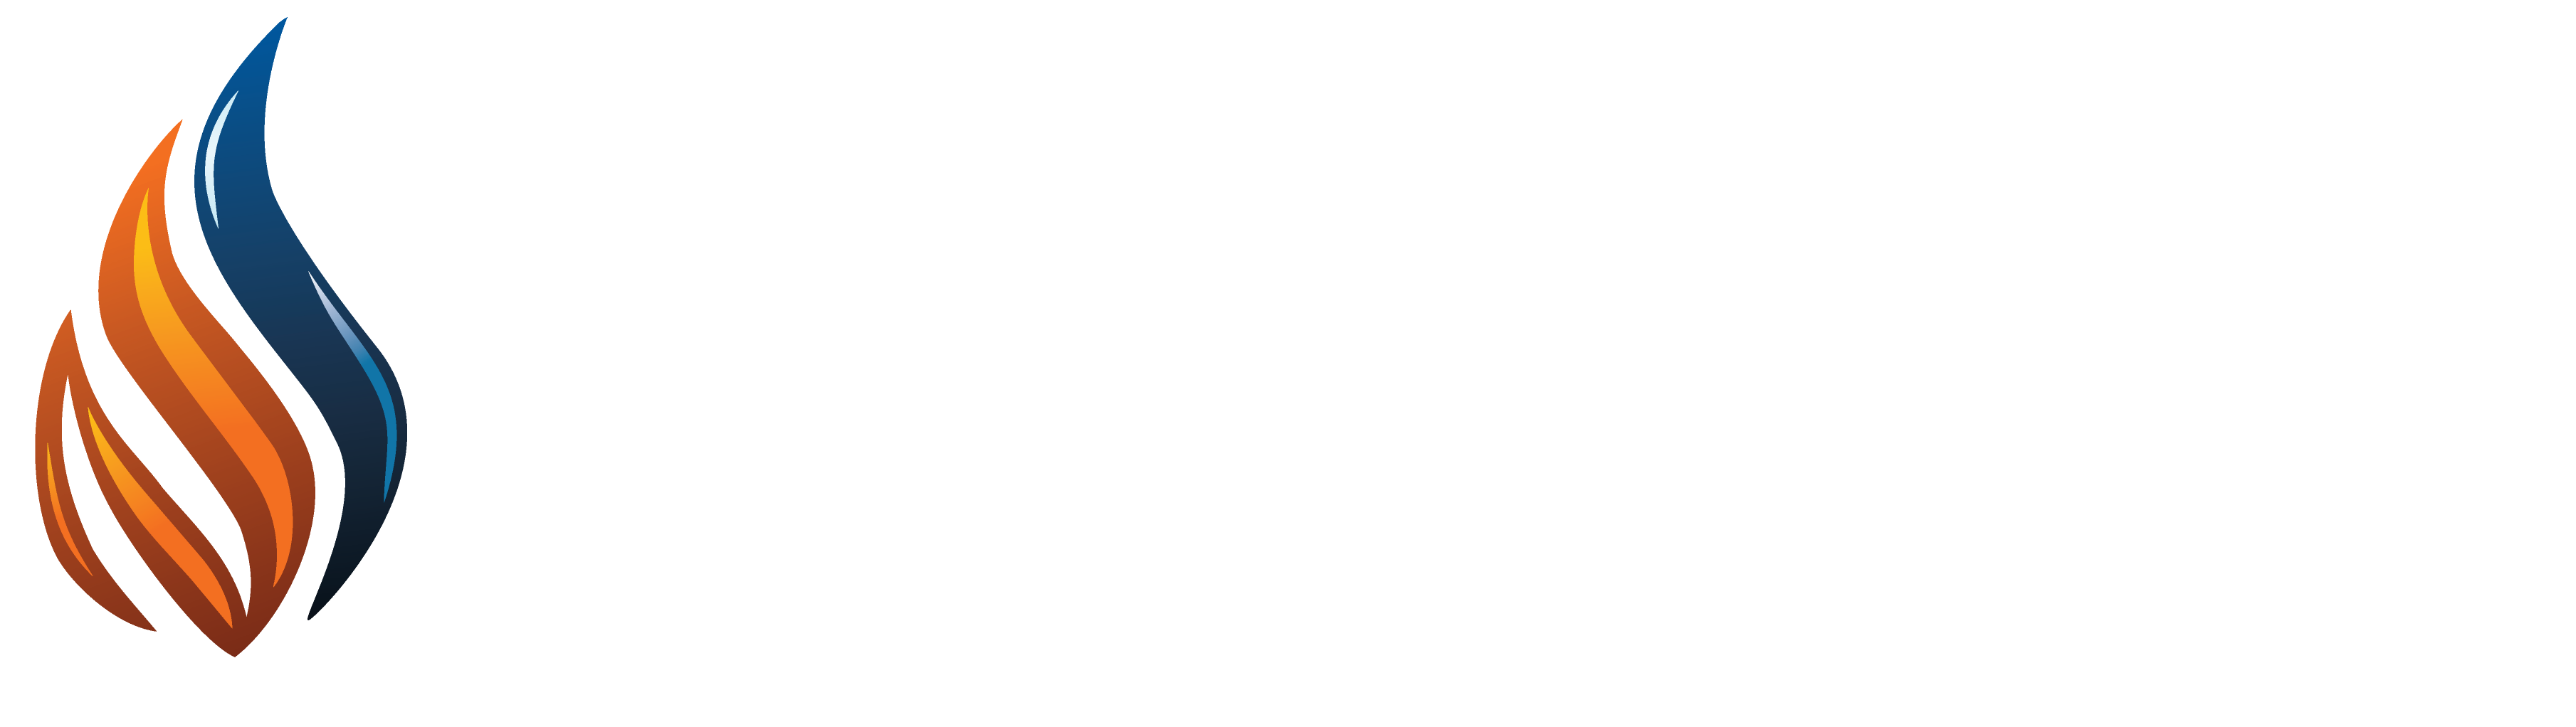 Wakefield Plumbing & Heating